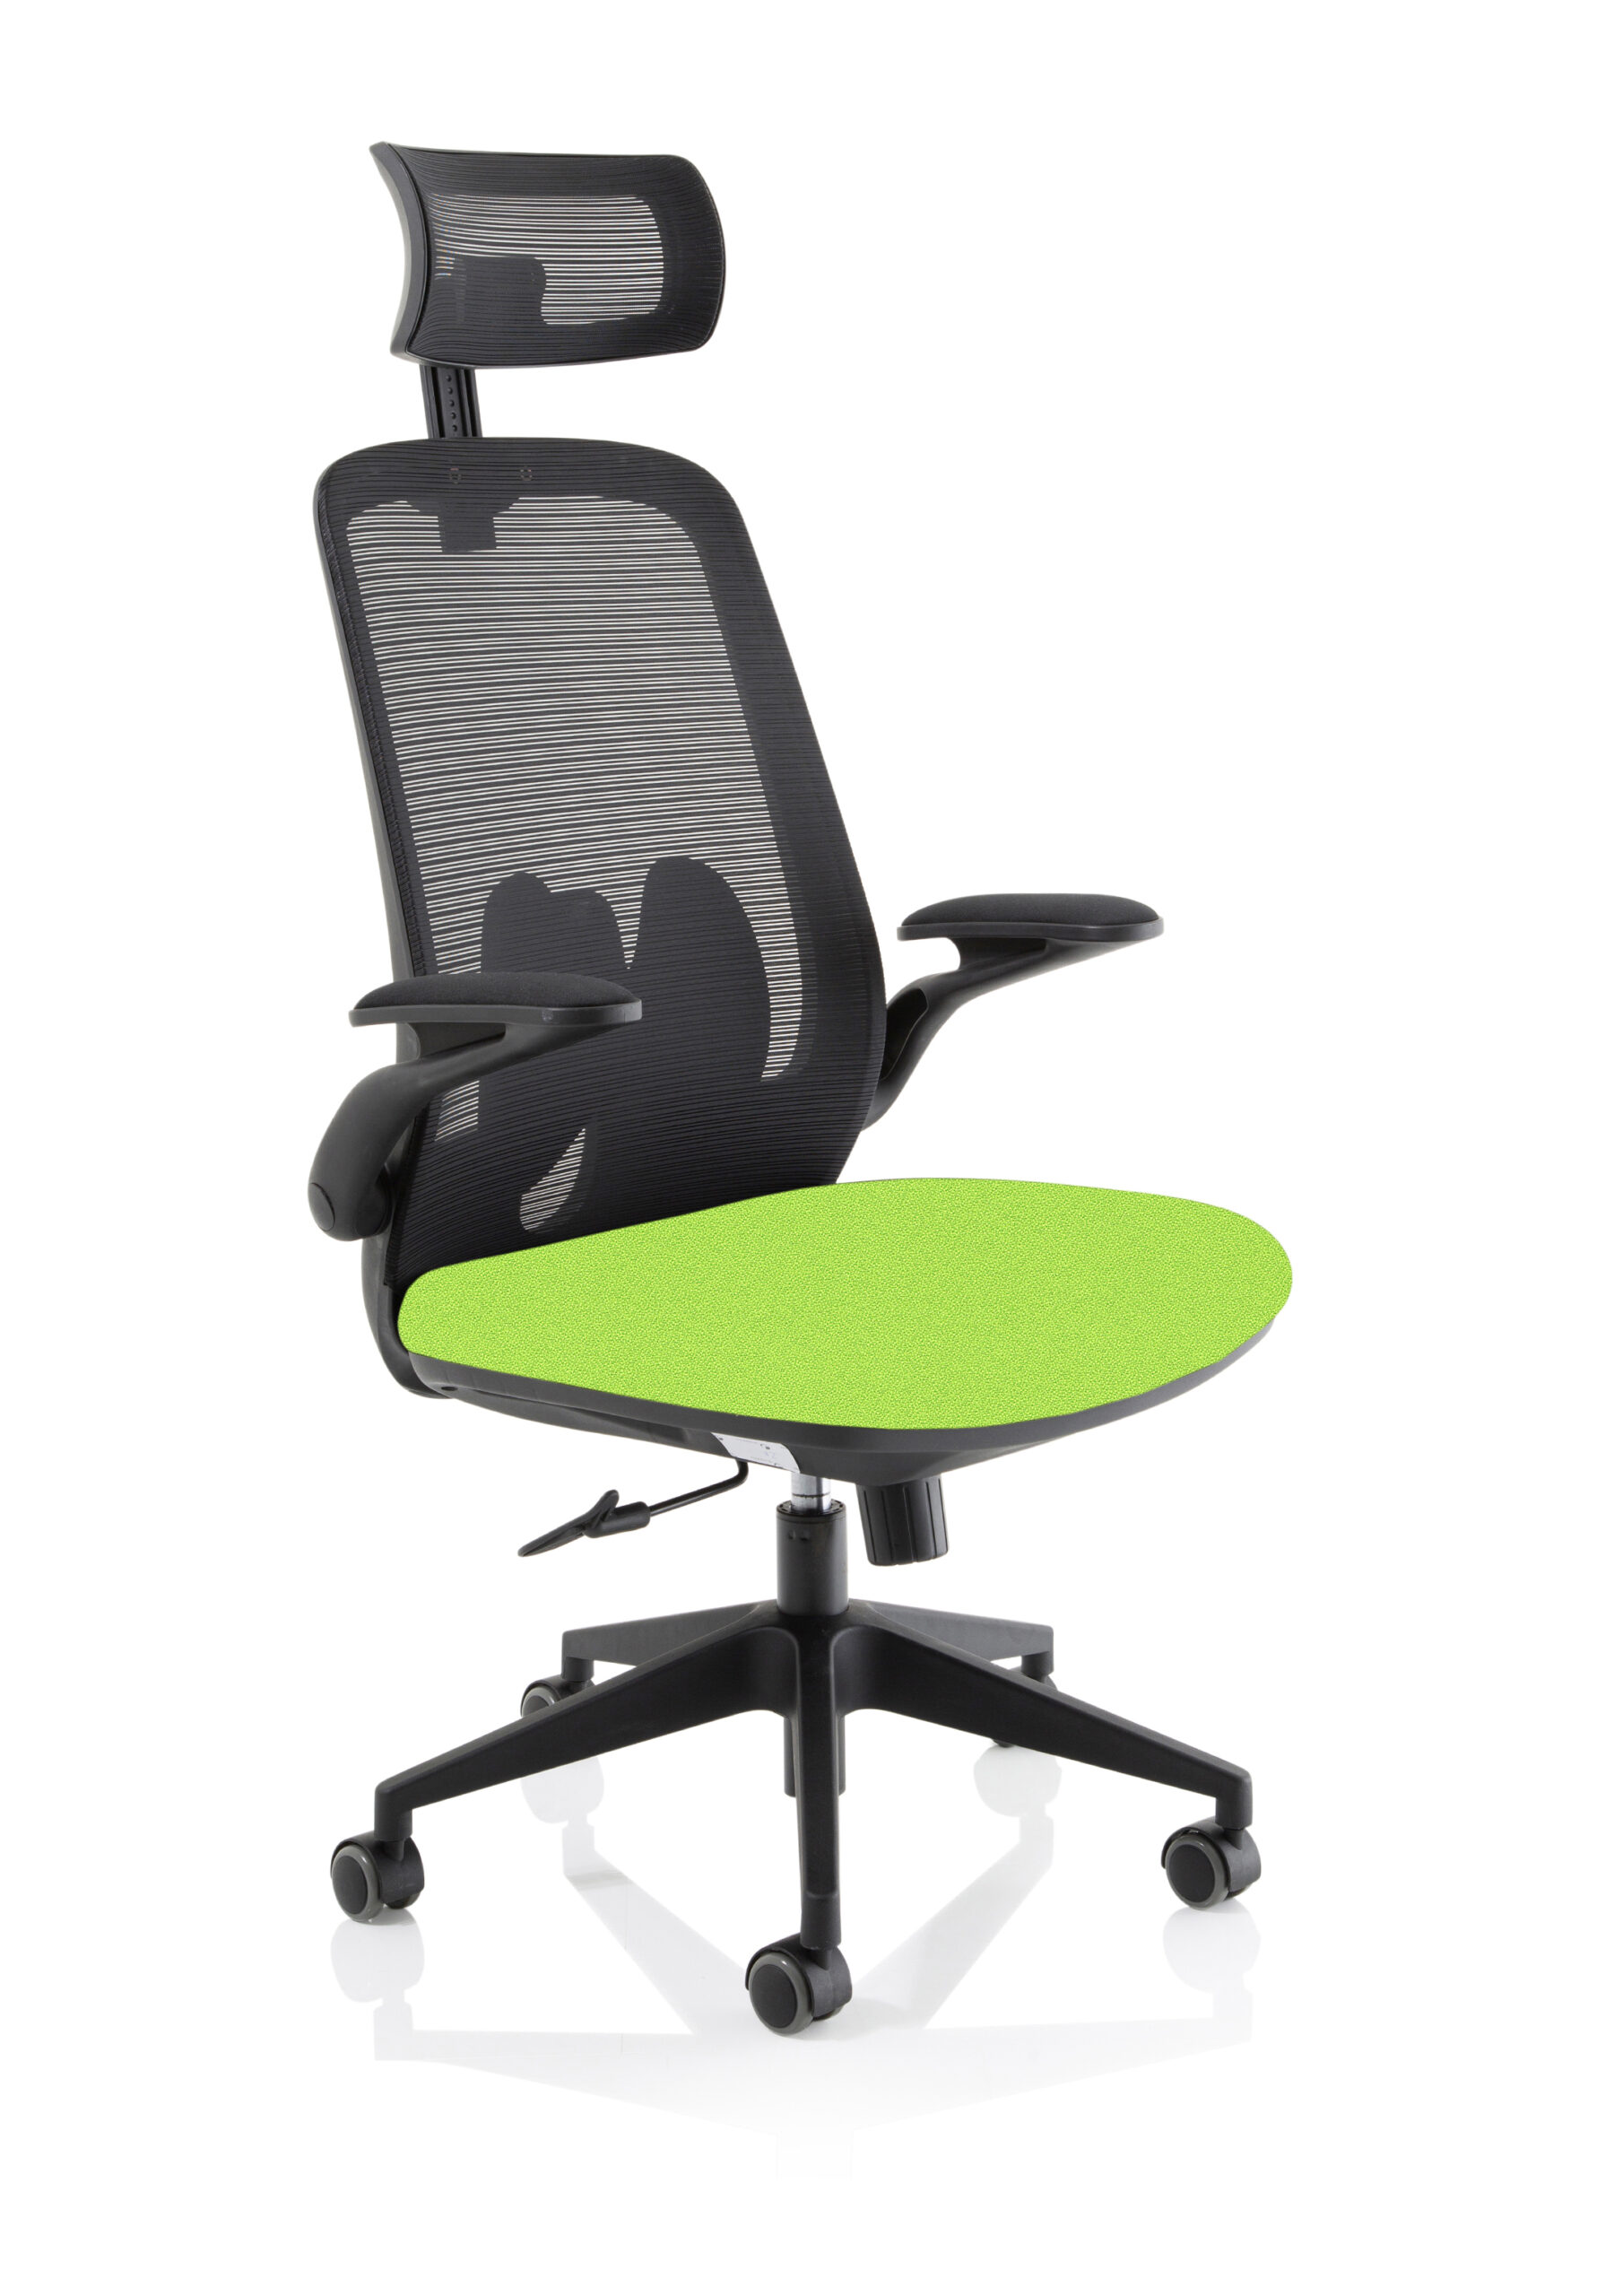 Lasino Executive Bespoke Fabric Seat Myrrh Green Mesh Chair With Folding Arms